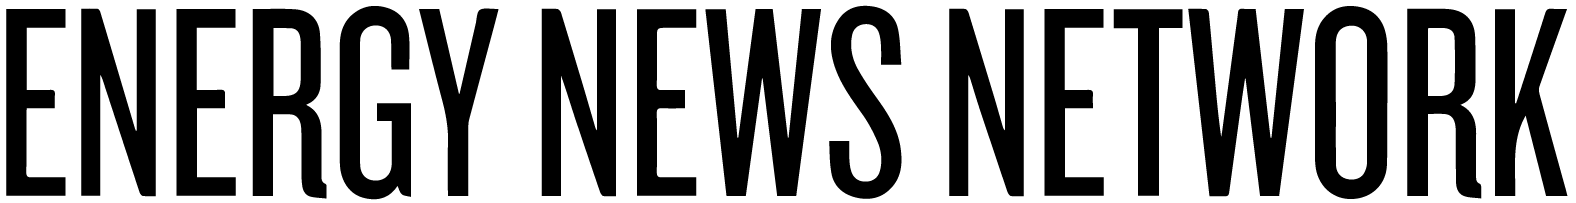 Energy News Network logo